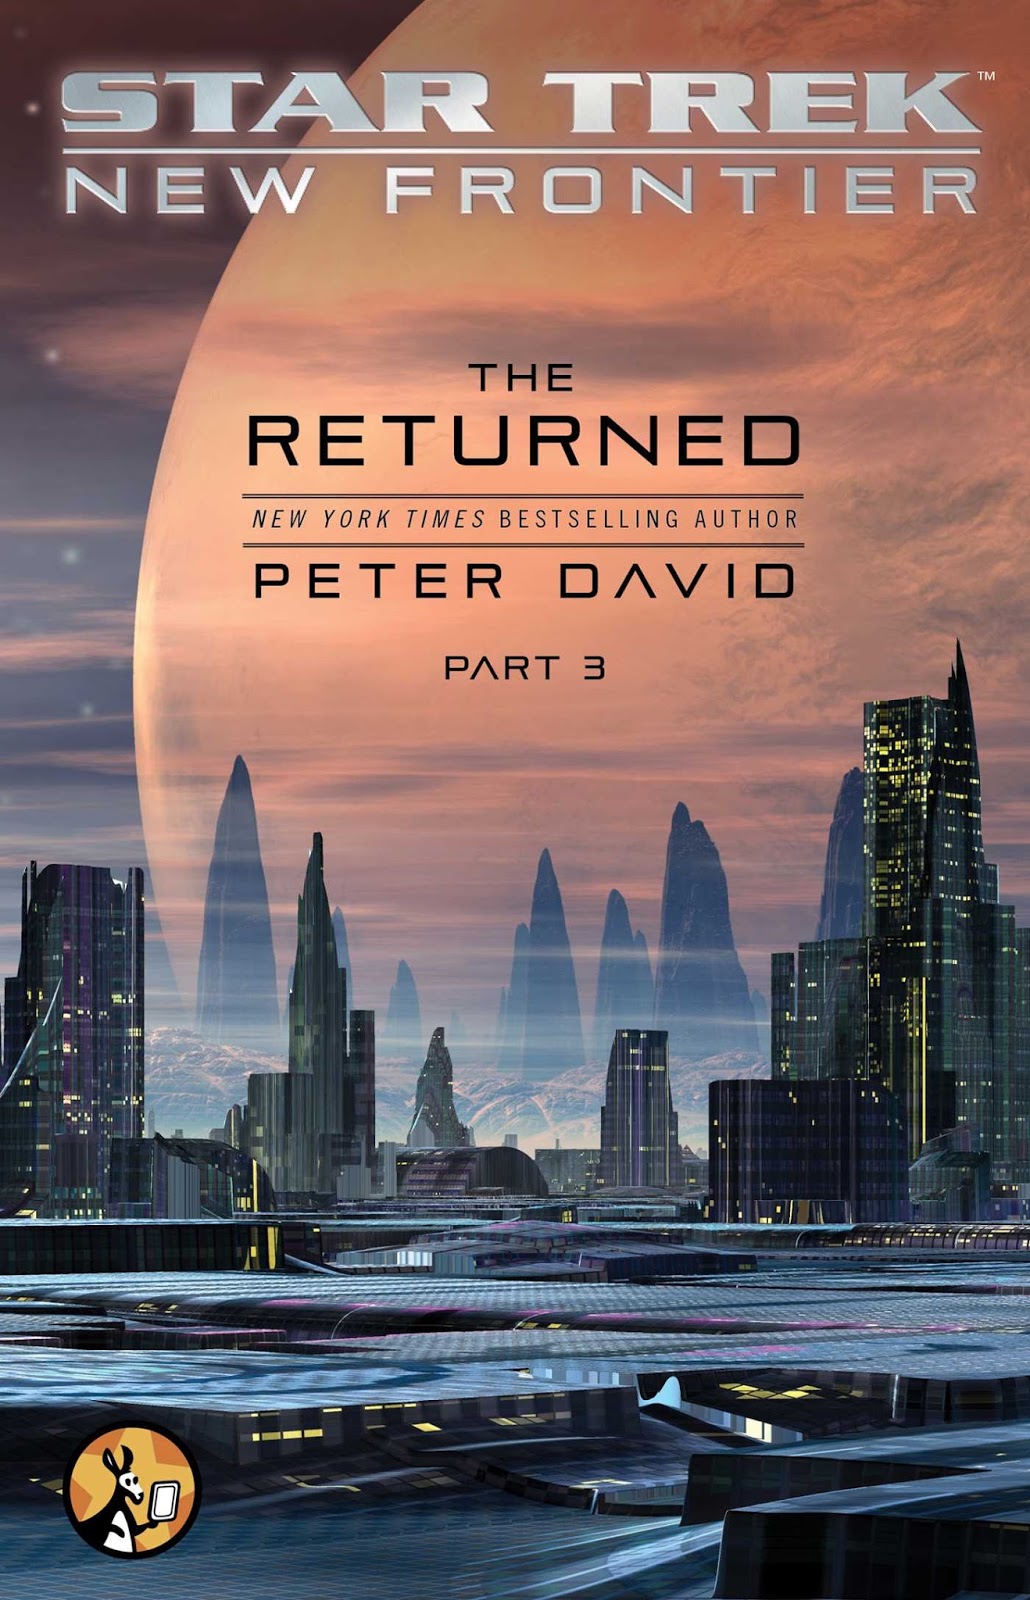 “Star Trek: New Frontier: The Returned Part 3” Review by Jimsscifi.blogspot.com